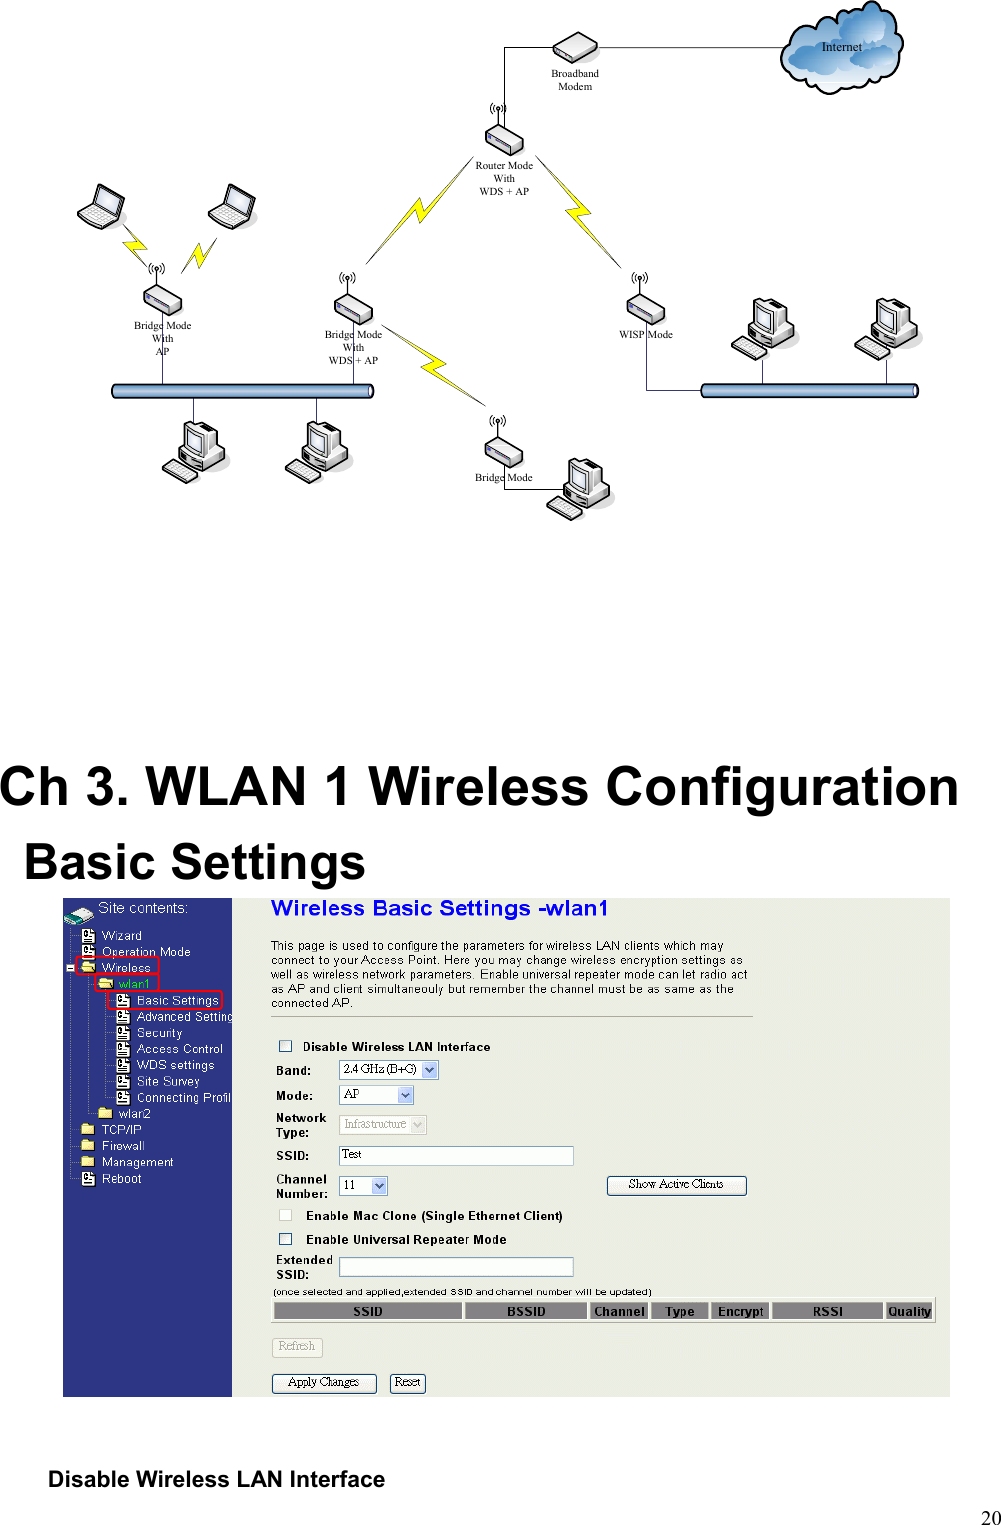  20Bridge ModeWithAPBridge ModeWith WDS + APBridge ModeRouter ModeWith WDS + APWISP ModeInternetBroadbandModem     Ch 3. WLAN 1 Wireless Configuration Basic Settings     Disable Wireless LAN Interface 